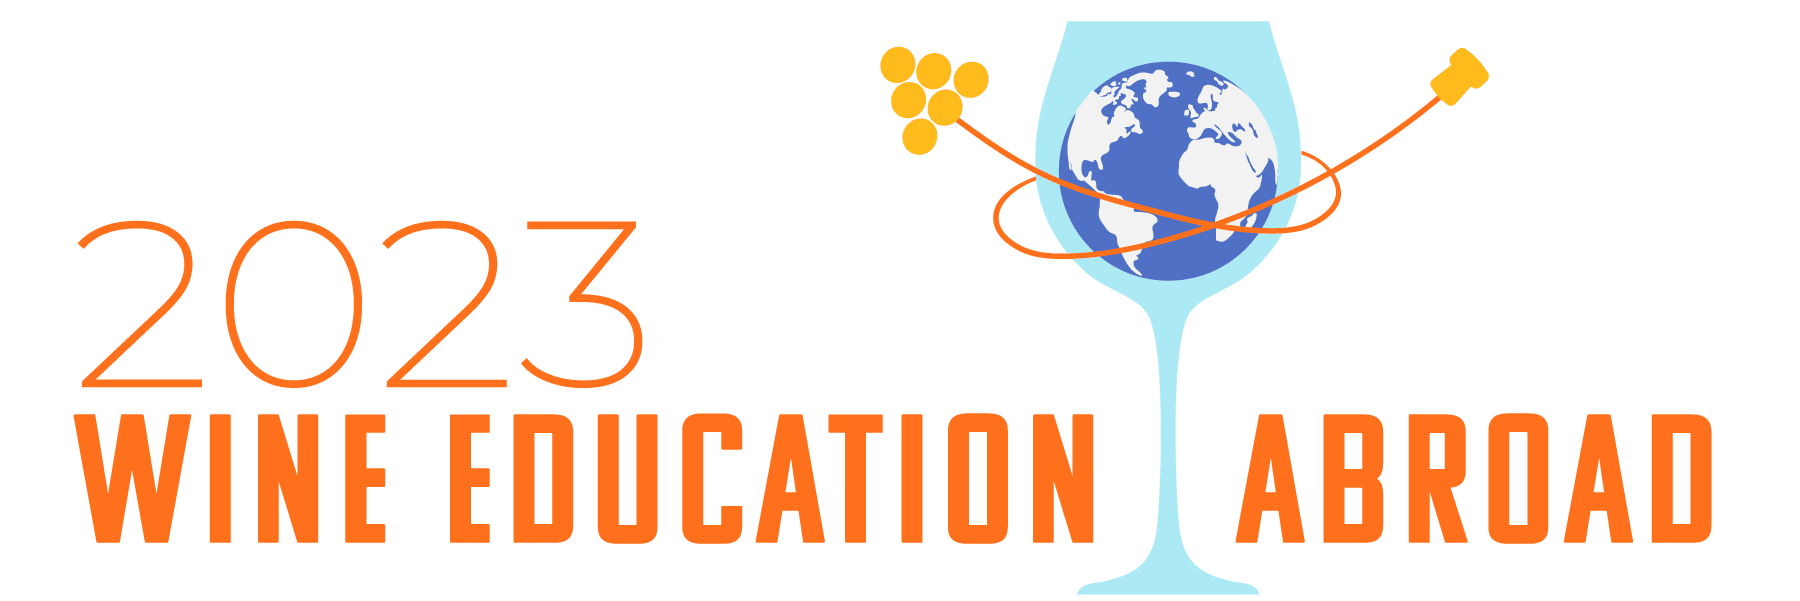 Wine education abroad Header 2023